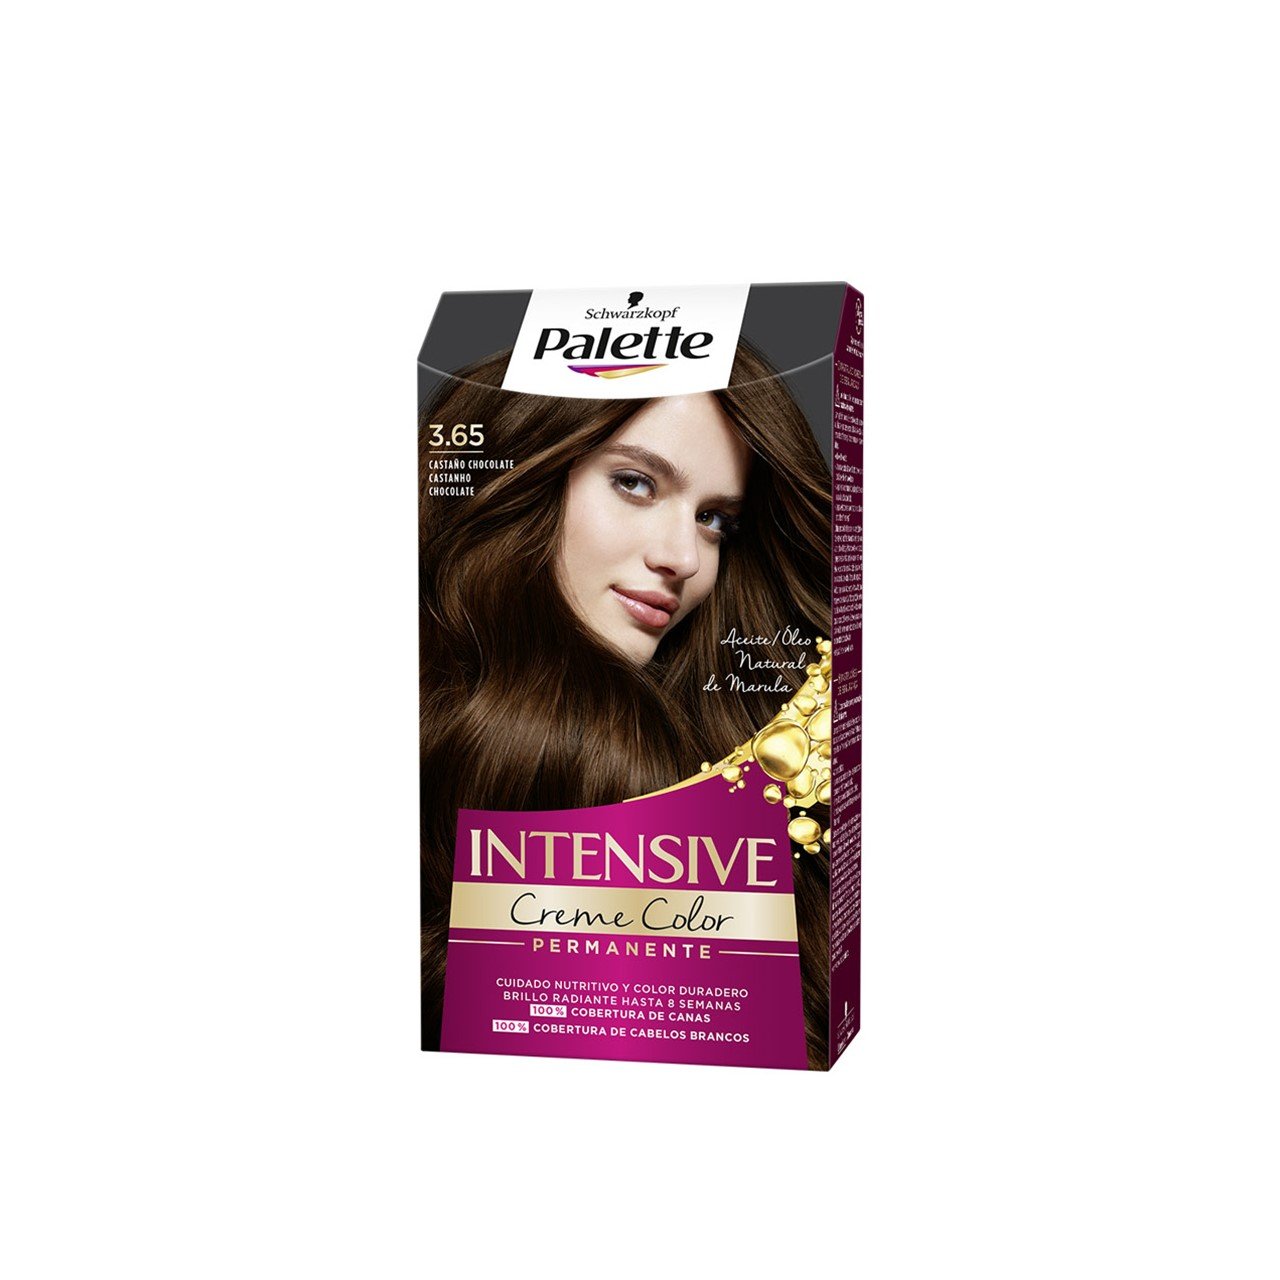 Schwarzkopf Palette Intensive Creme Color Permanent Hair Dye 3.65 Chocolate Brown